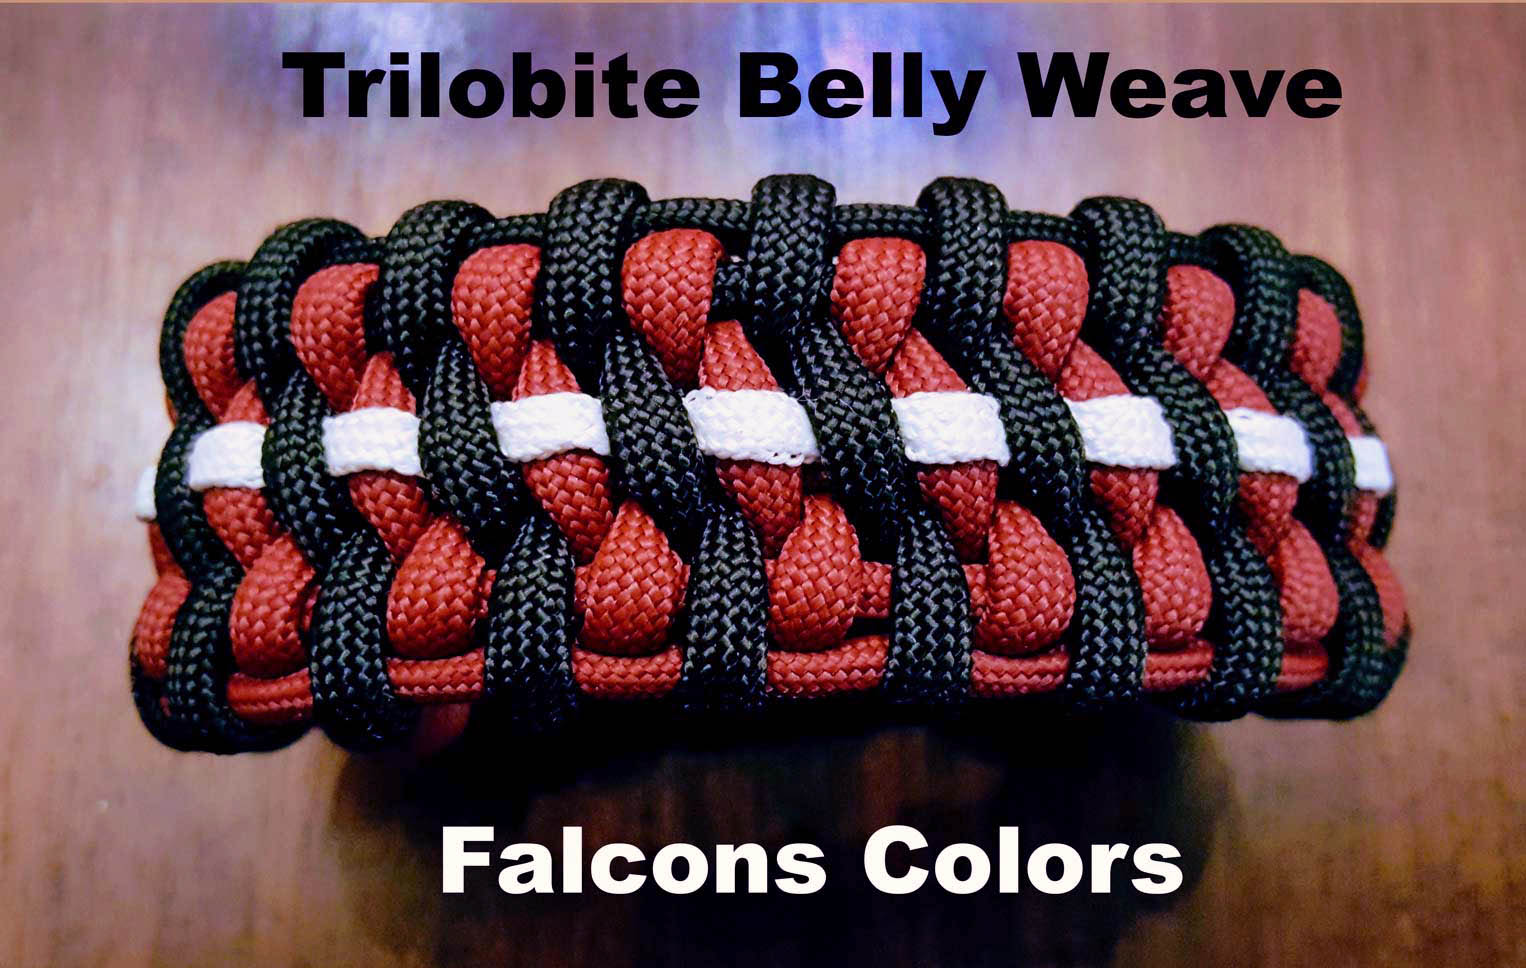 Trilobite tissage survie Wear Red & Black Handmade Paracord Bracelet